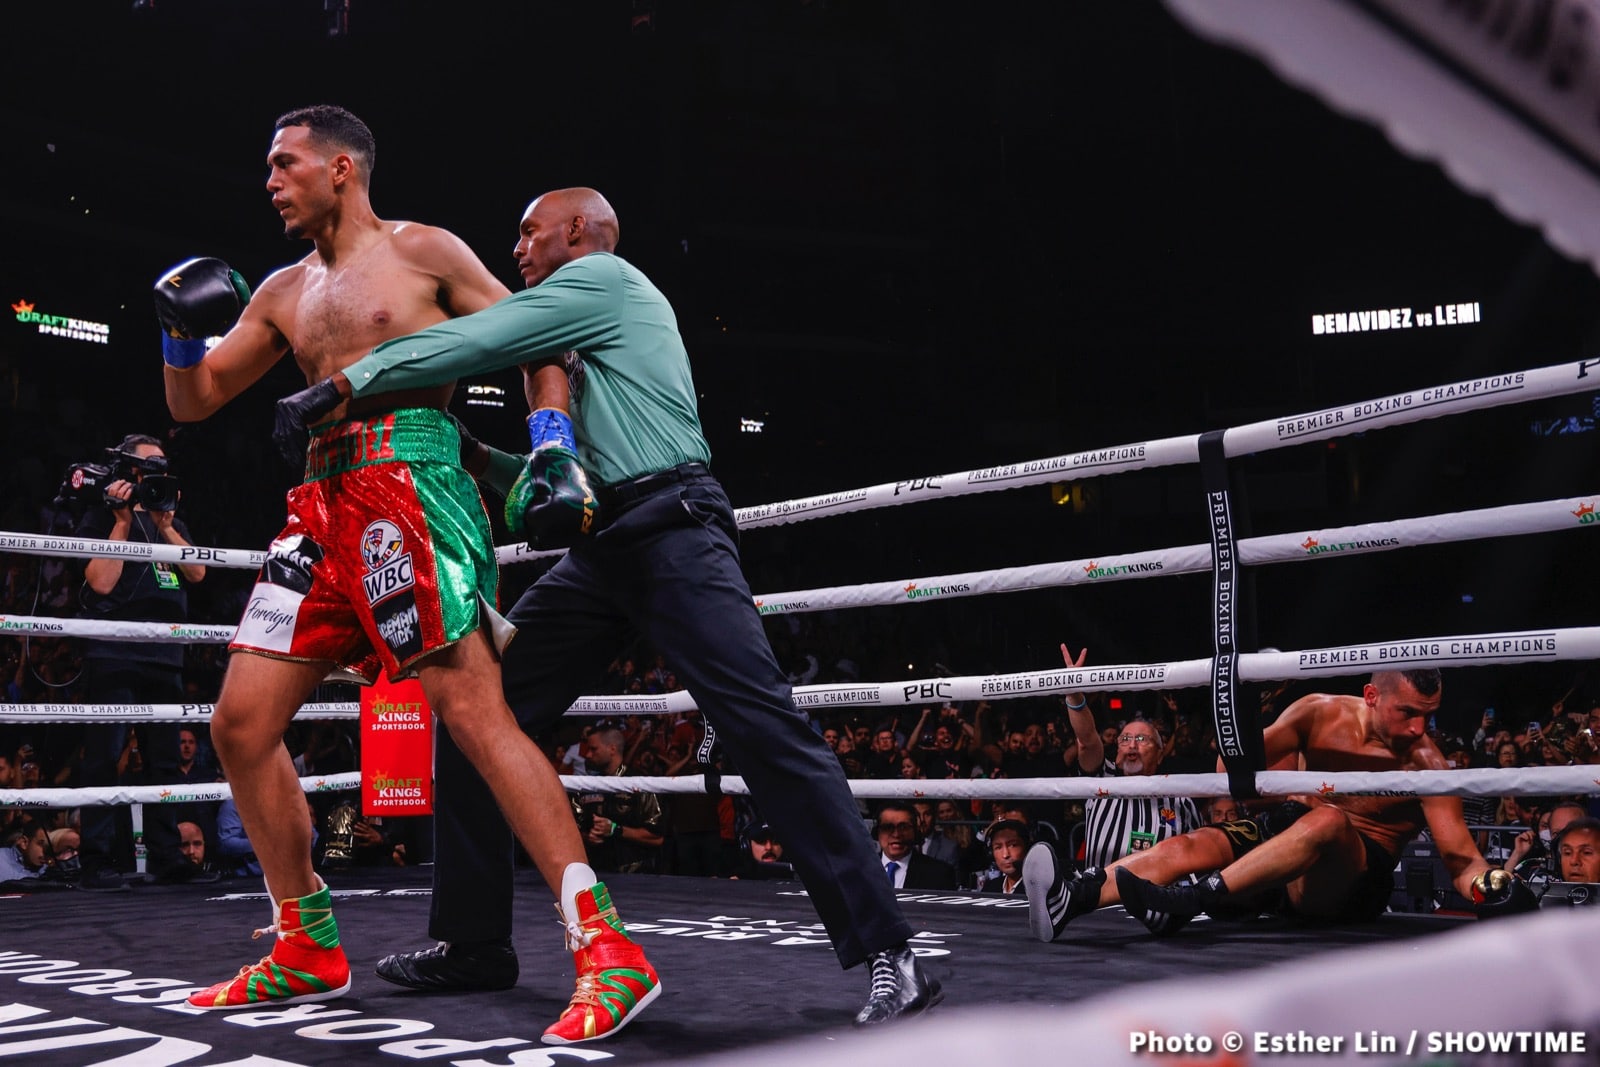 David Benavidez boxing image / photo